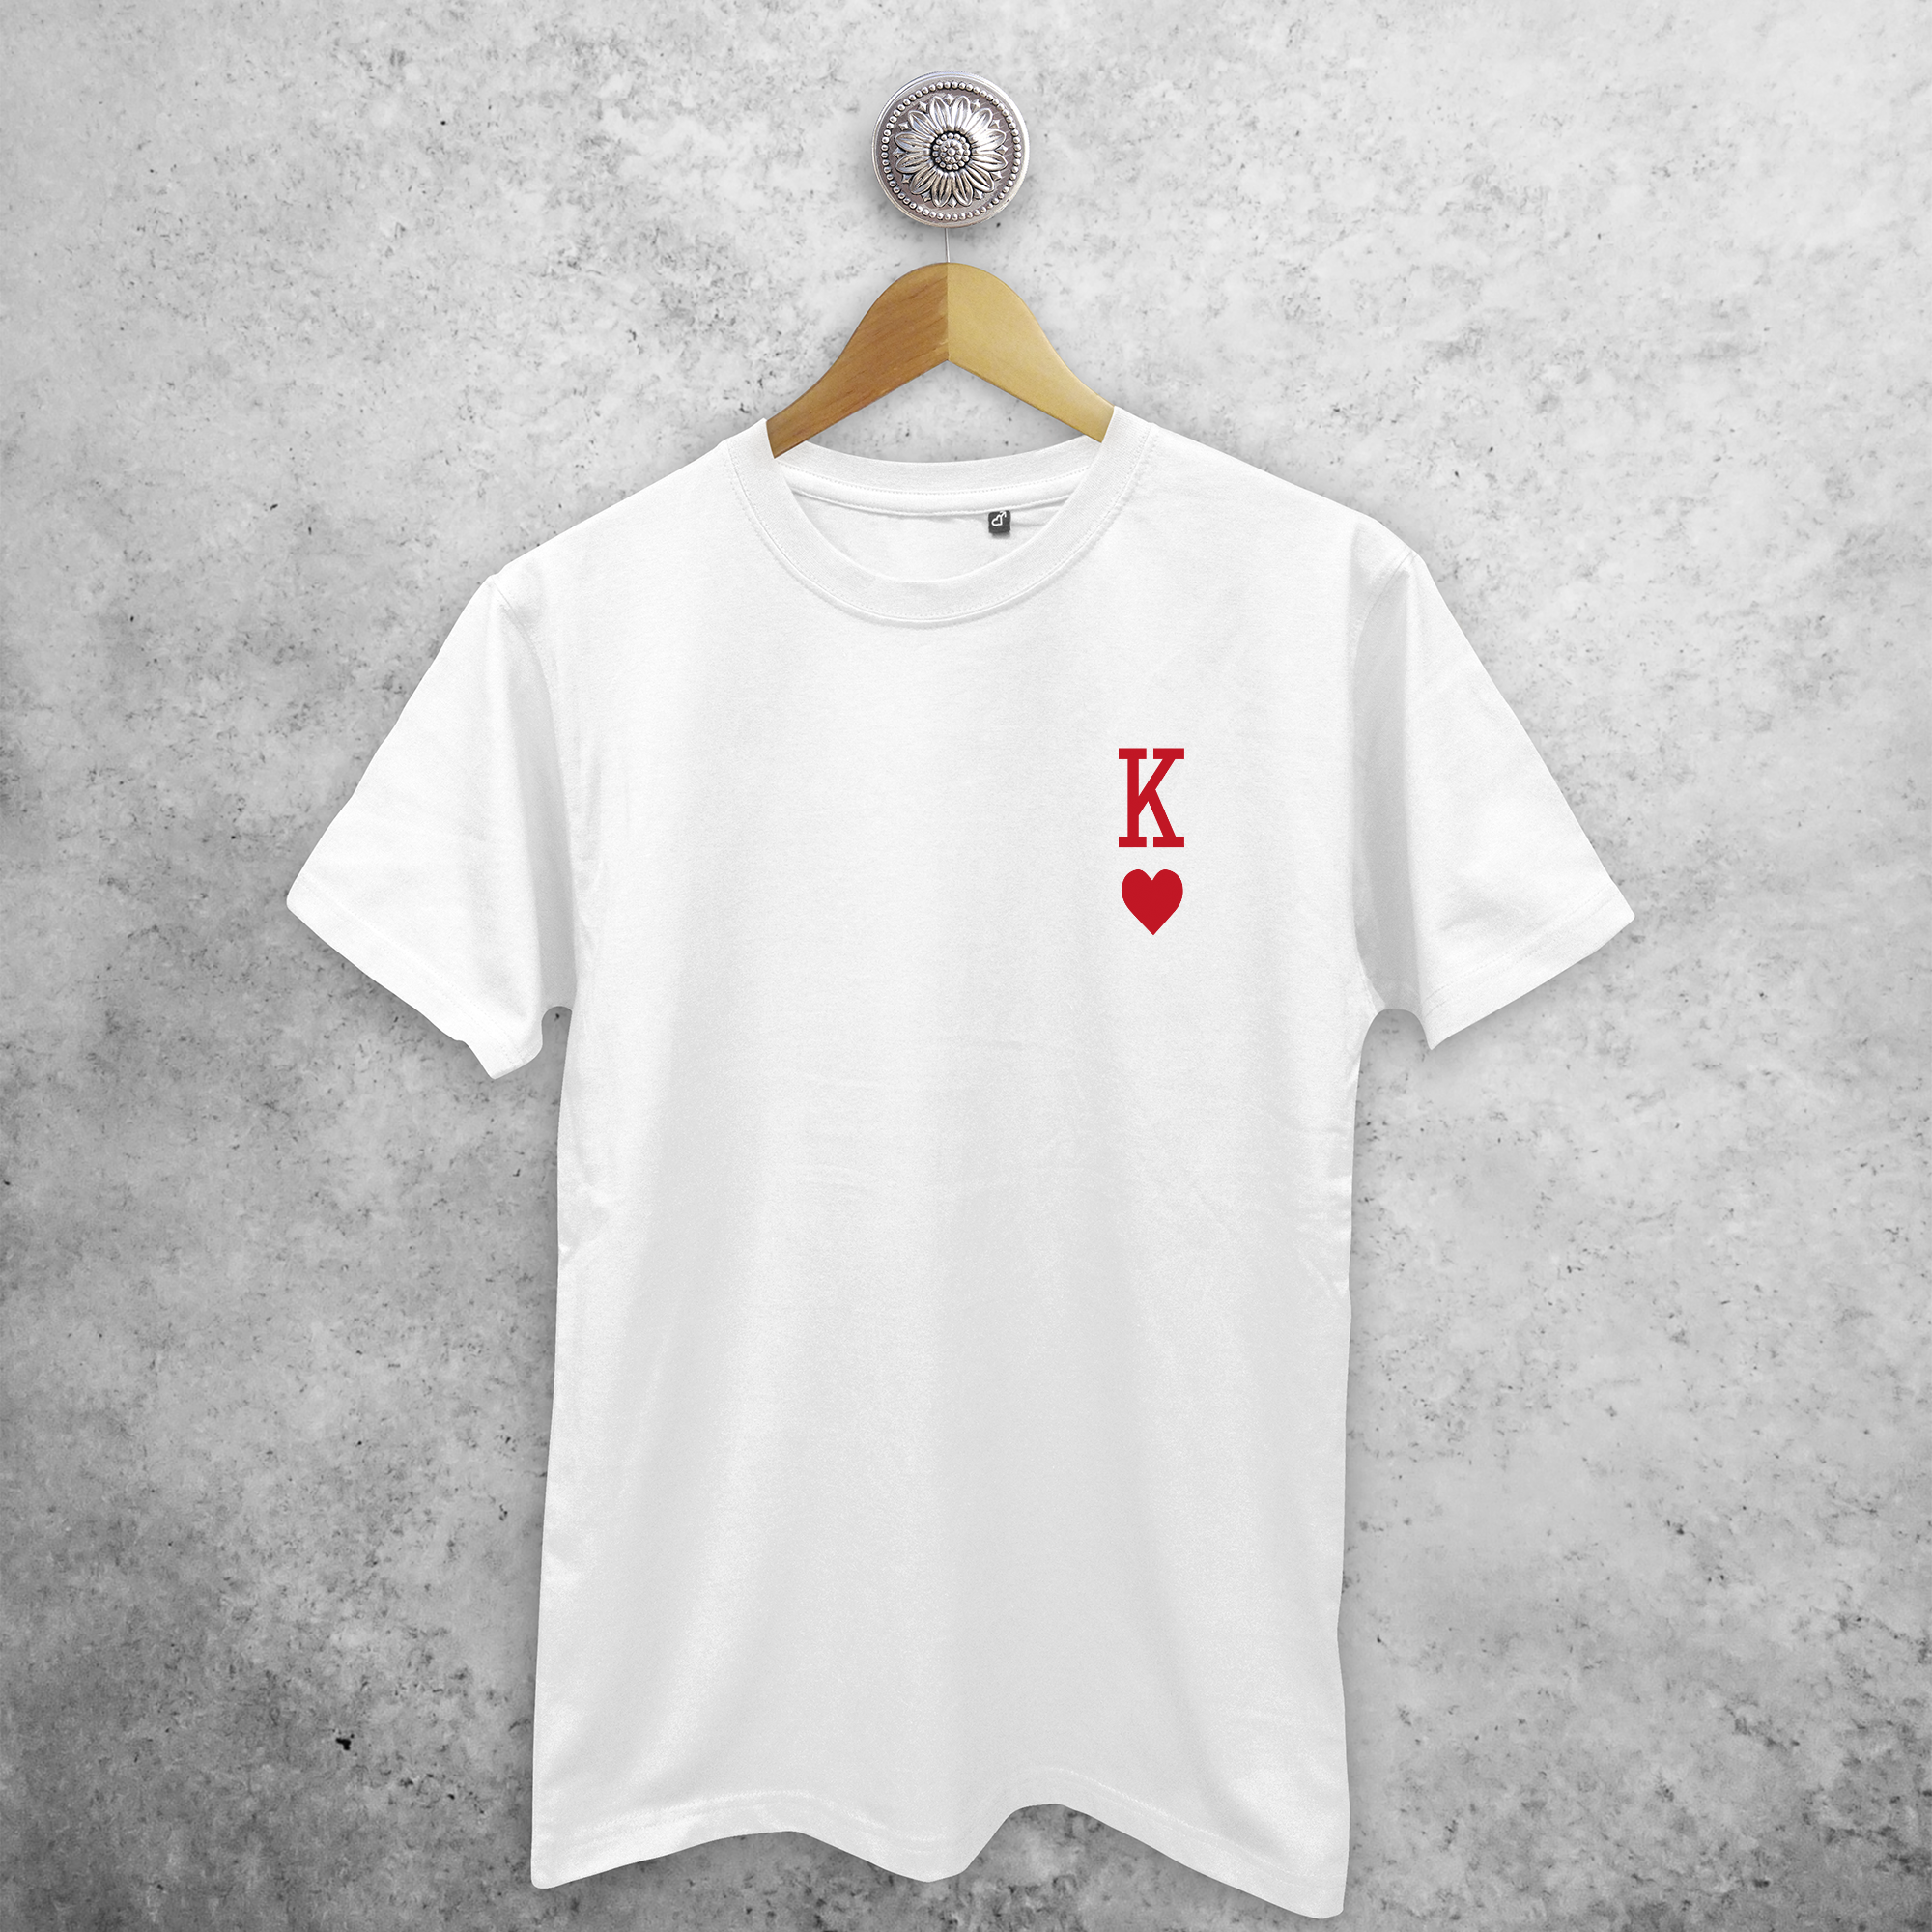 'King of hearts' volwassene shirt